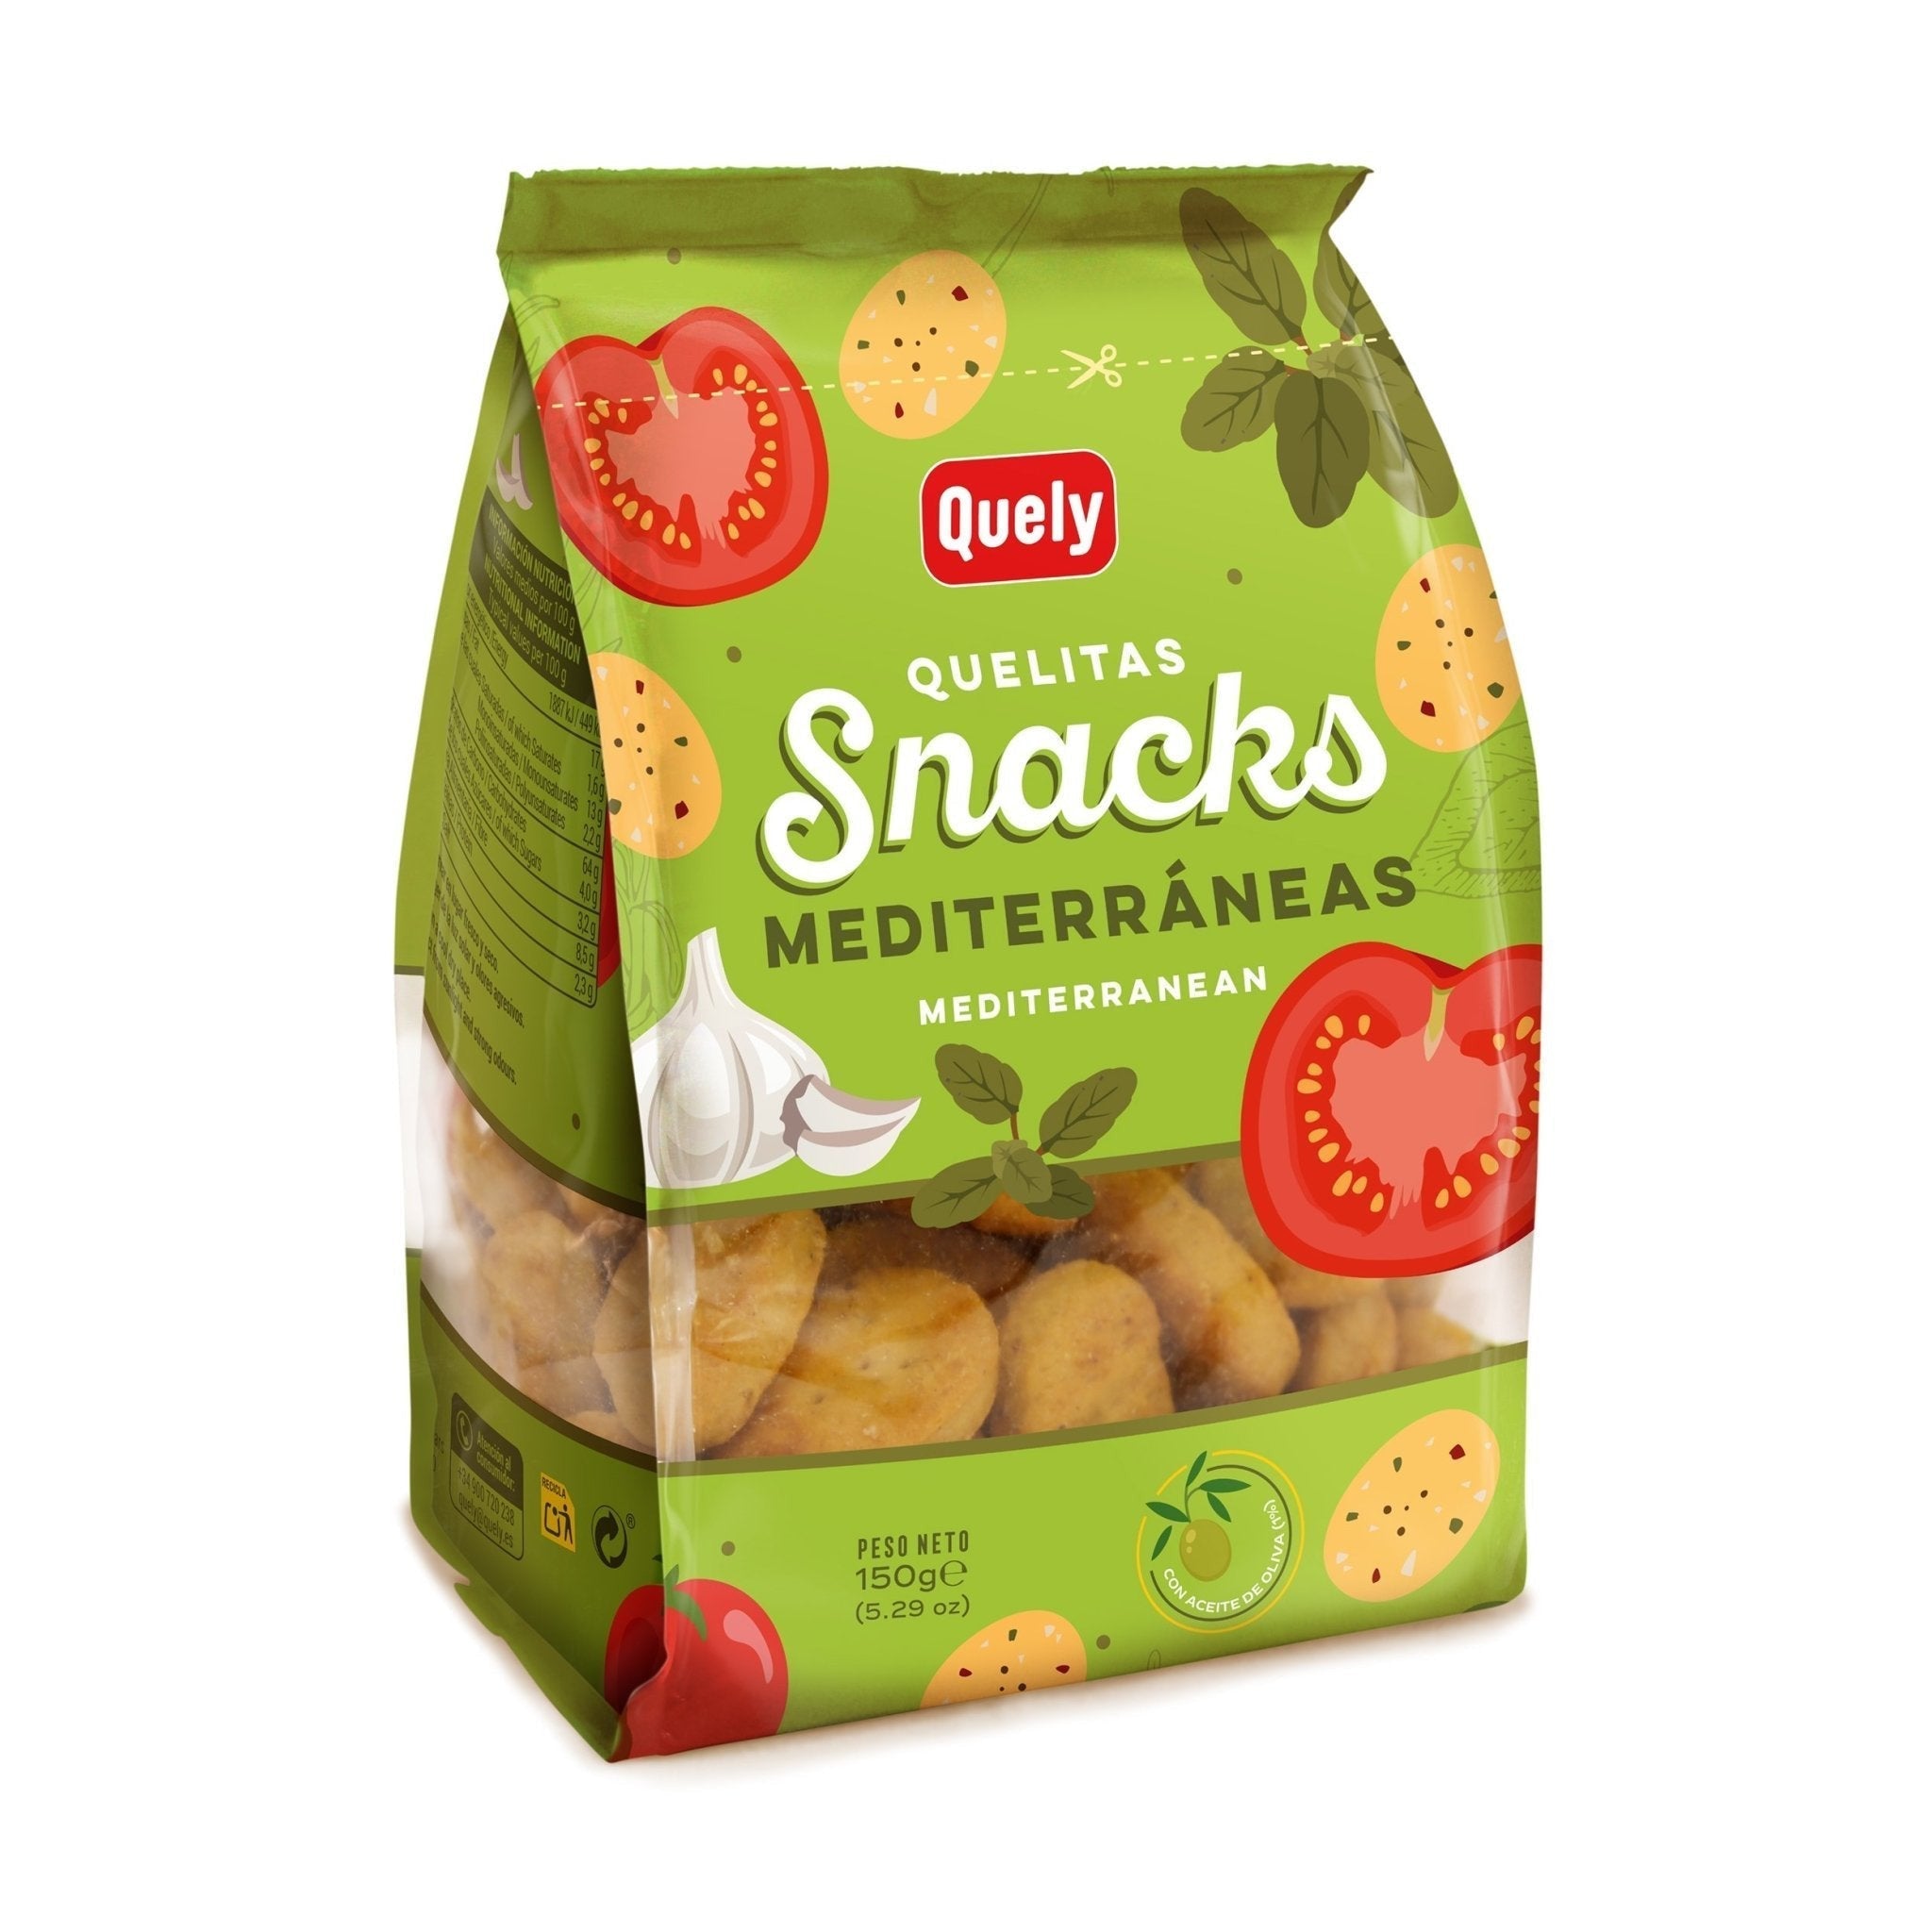 Quely Quelitas Snacks Mediterranean (150g) - Gourmet Markt - Quely